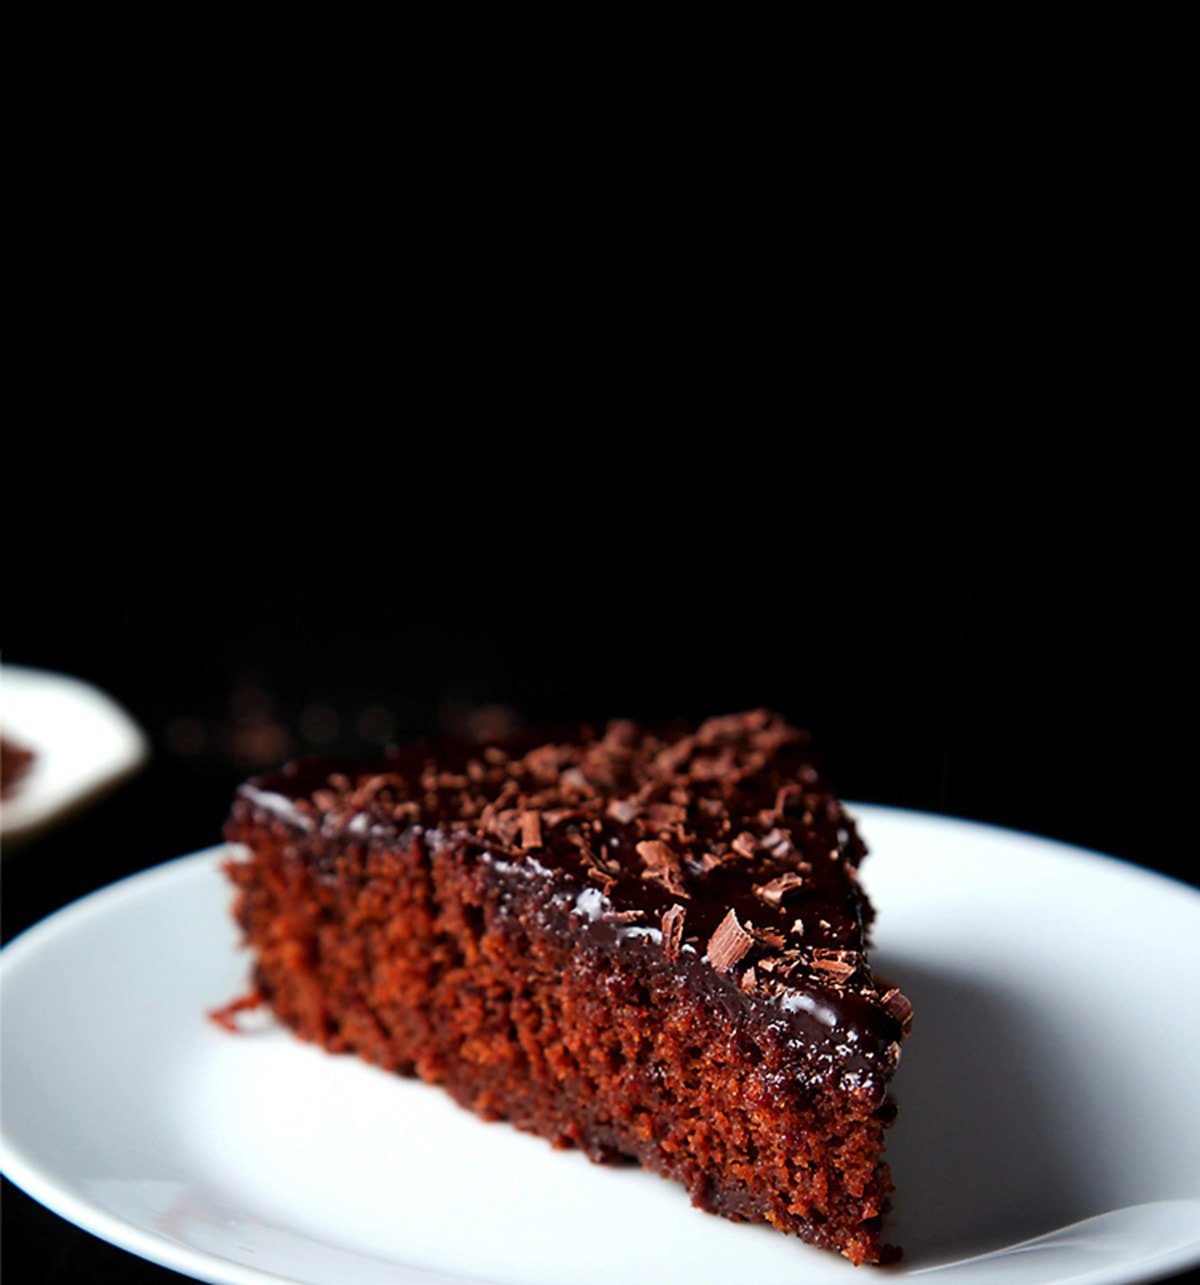 A triangular wedge of eggless chocolate cake on a white plate